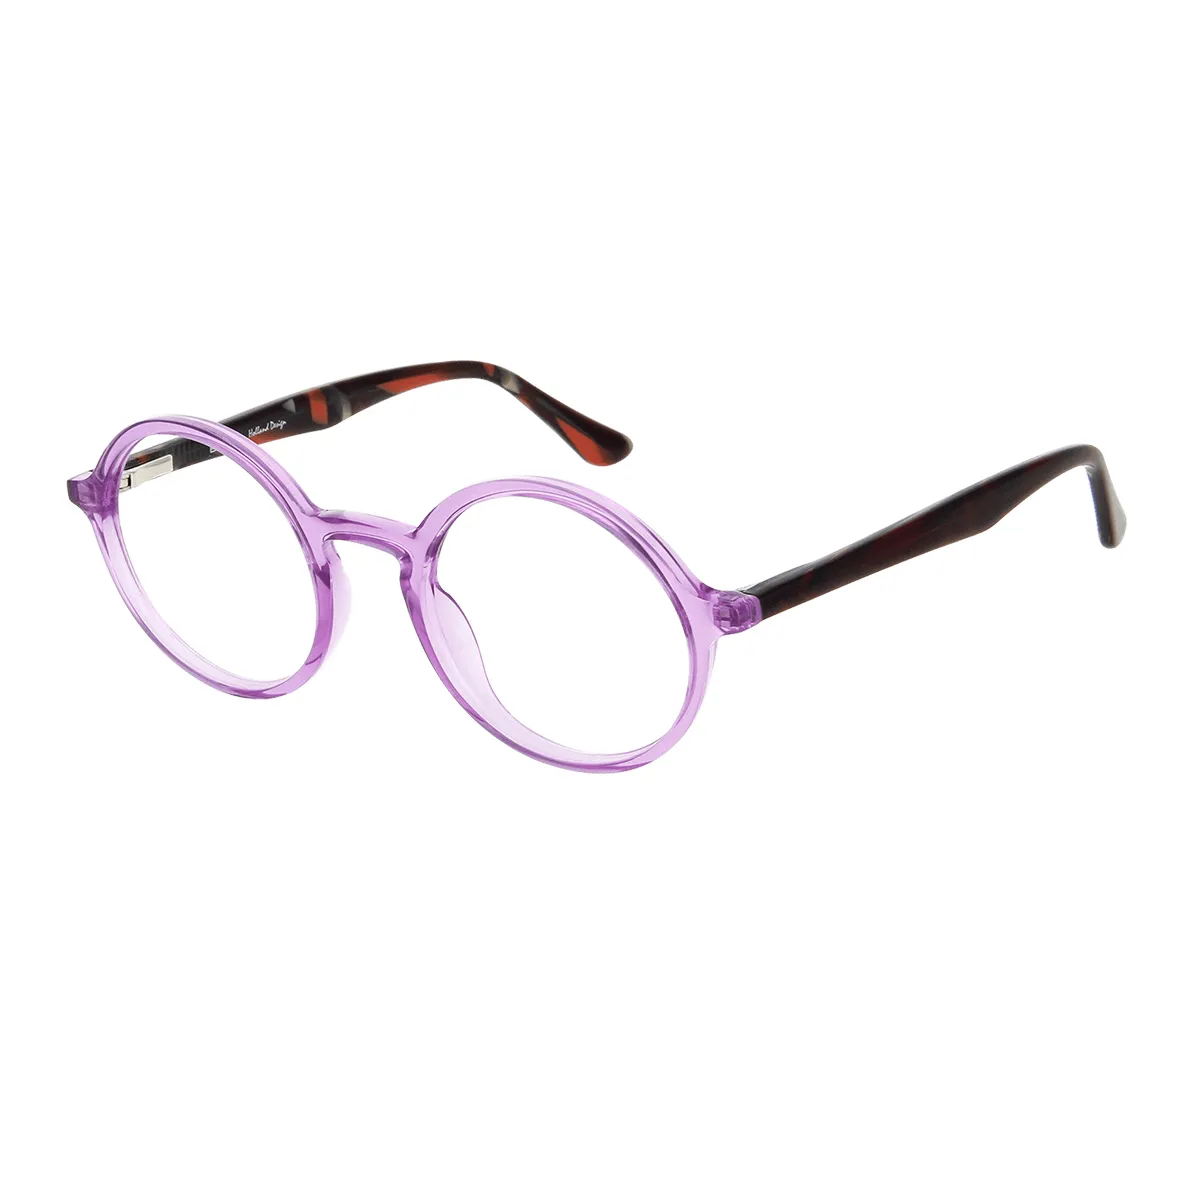 Deanna - Round Purple Glasses for Women - EFE